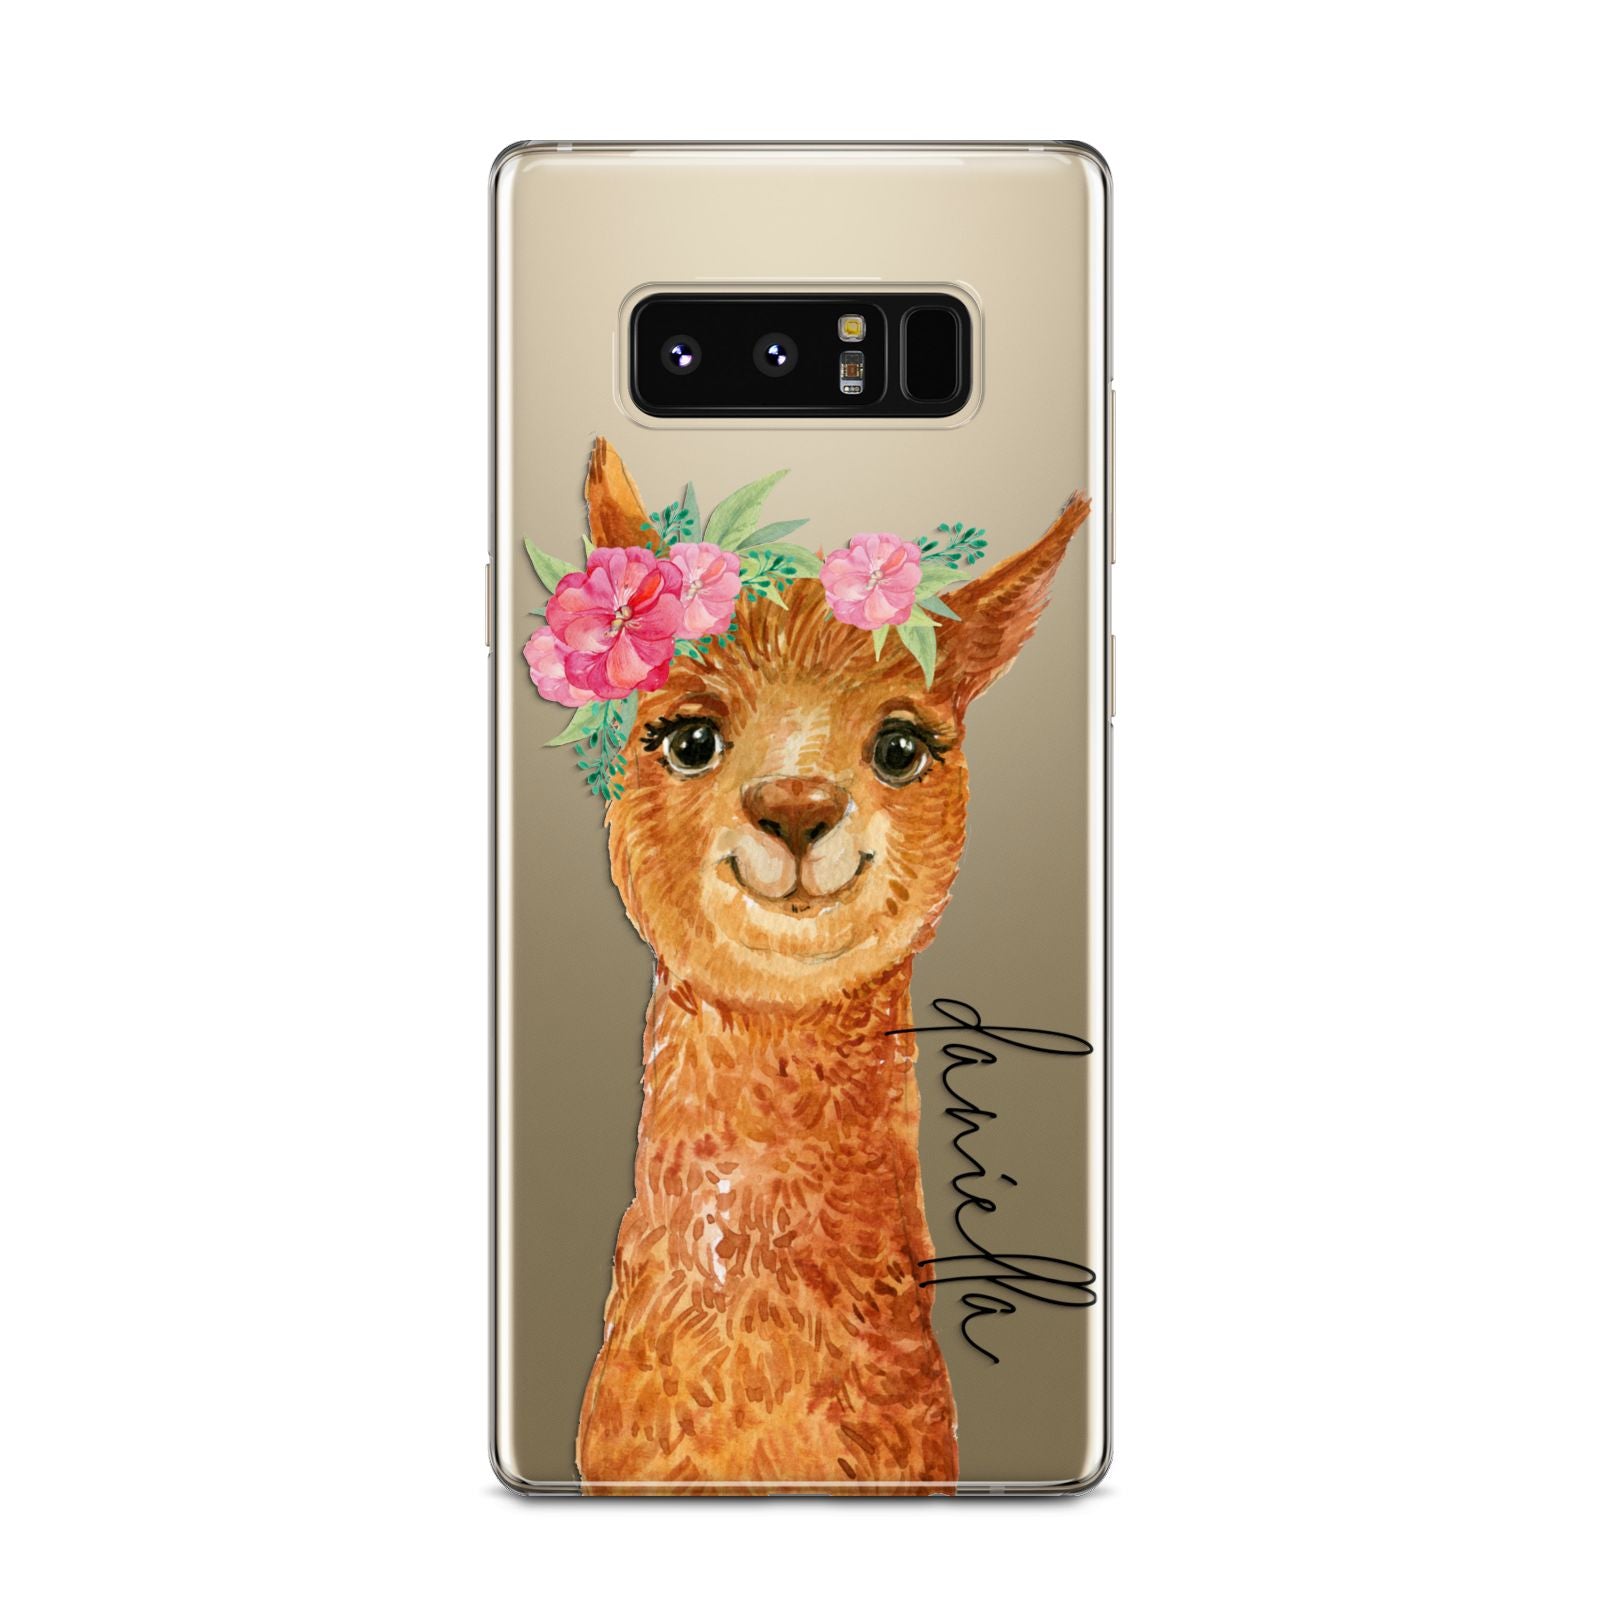 Personalised Llama Samsung Galaxy Note 8 Case